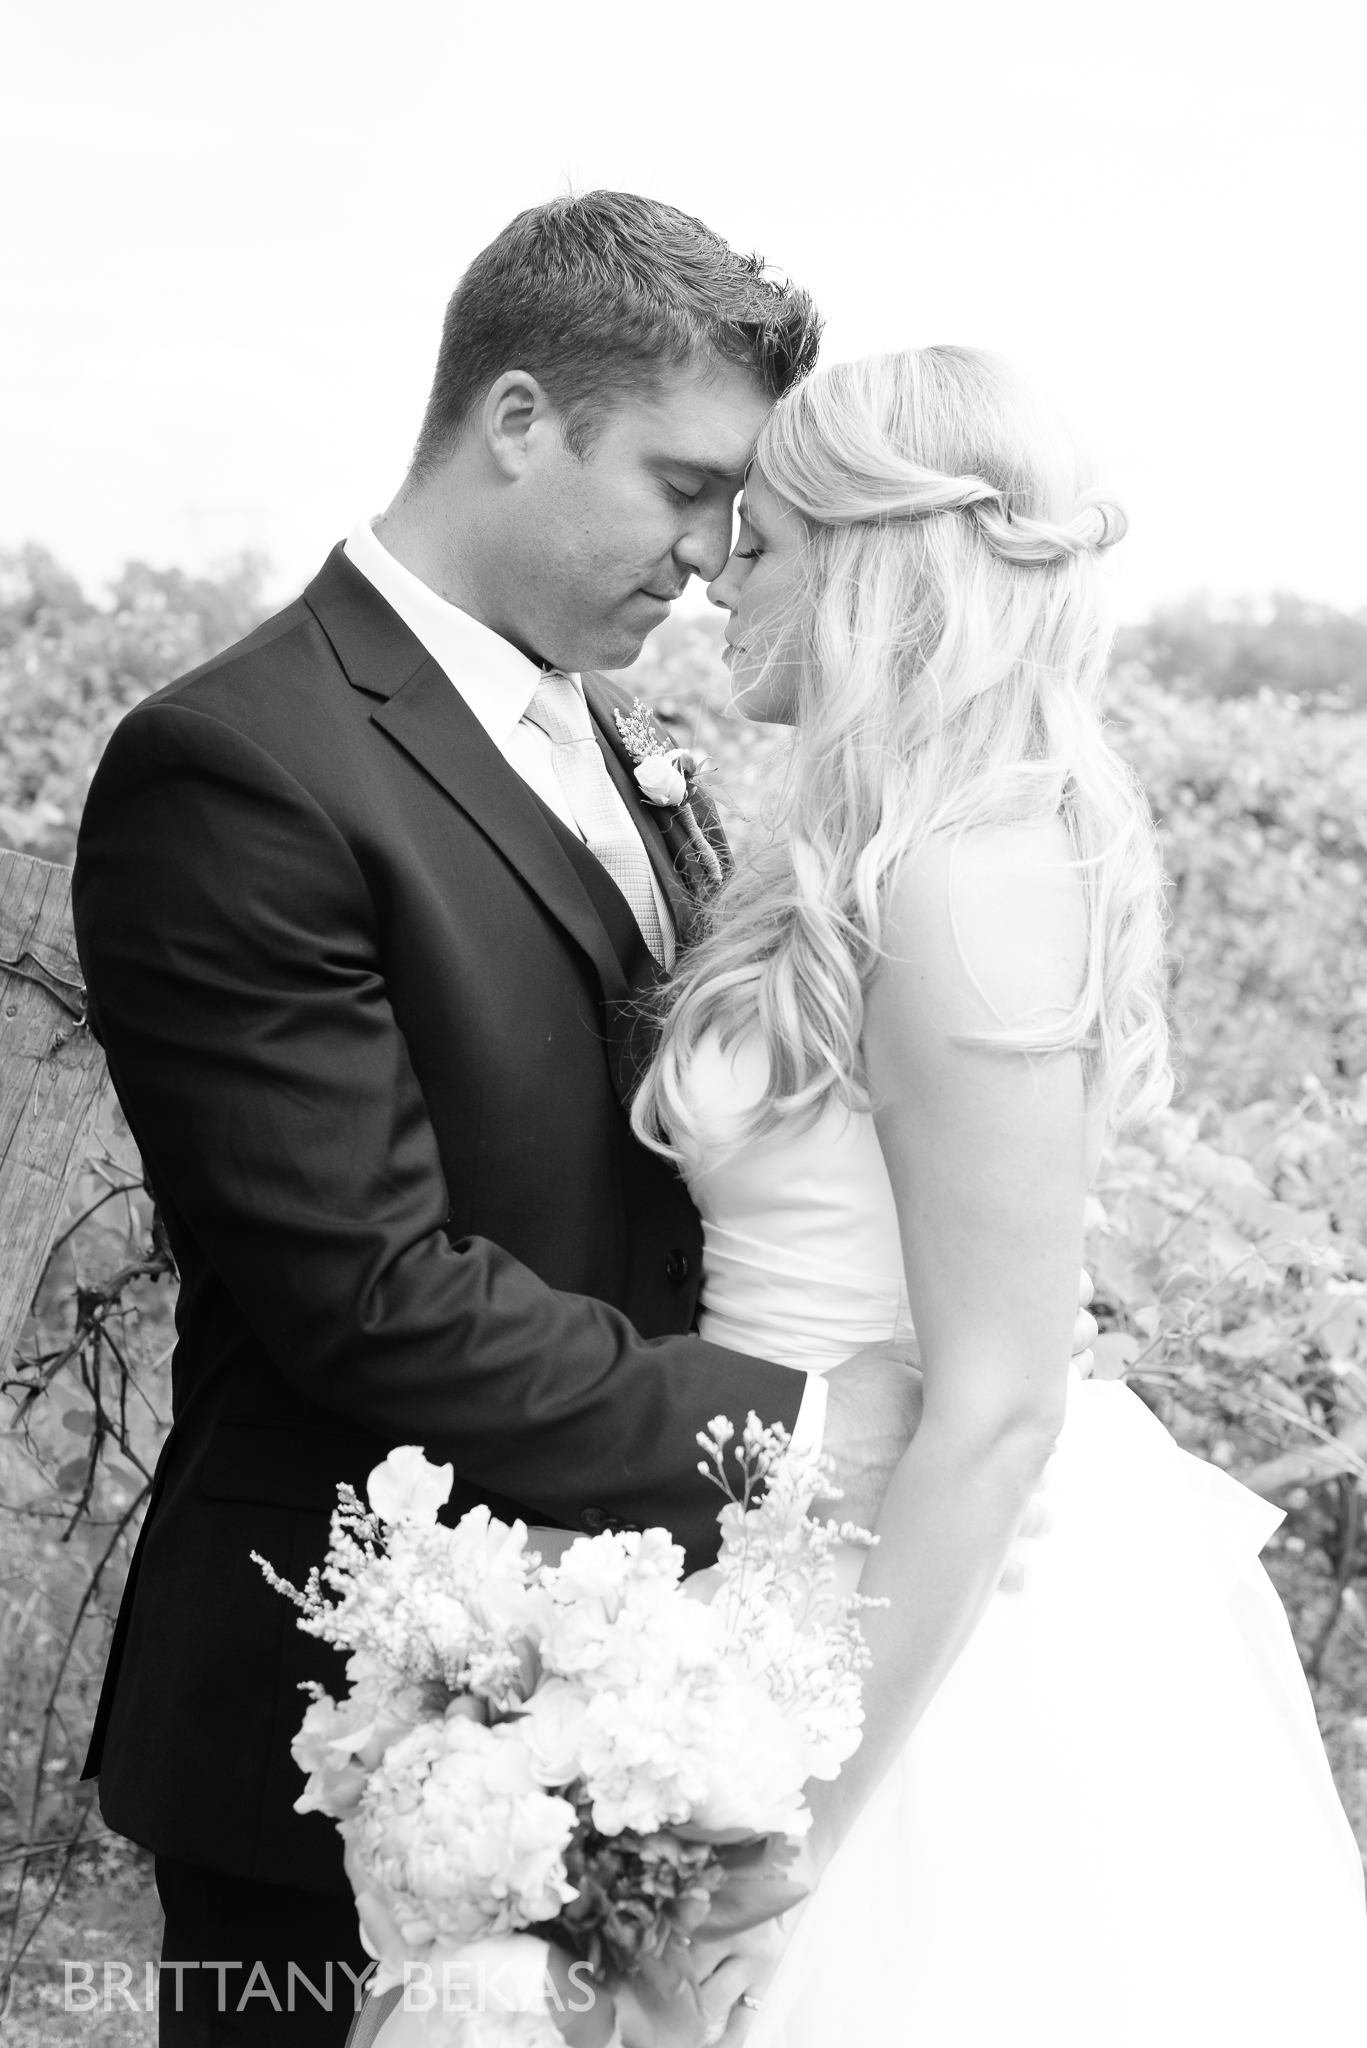 New Buffalo Wedding - Willow Harbor Vineyards Wedding Photos - Brittany Bekas Photography_0031